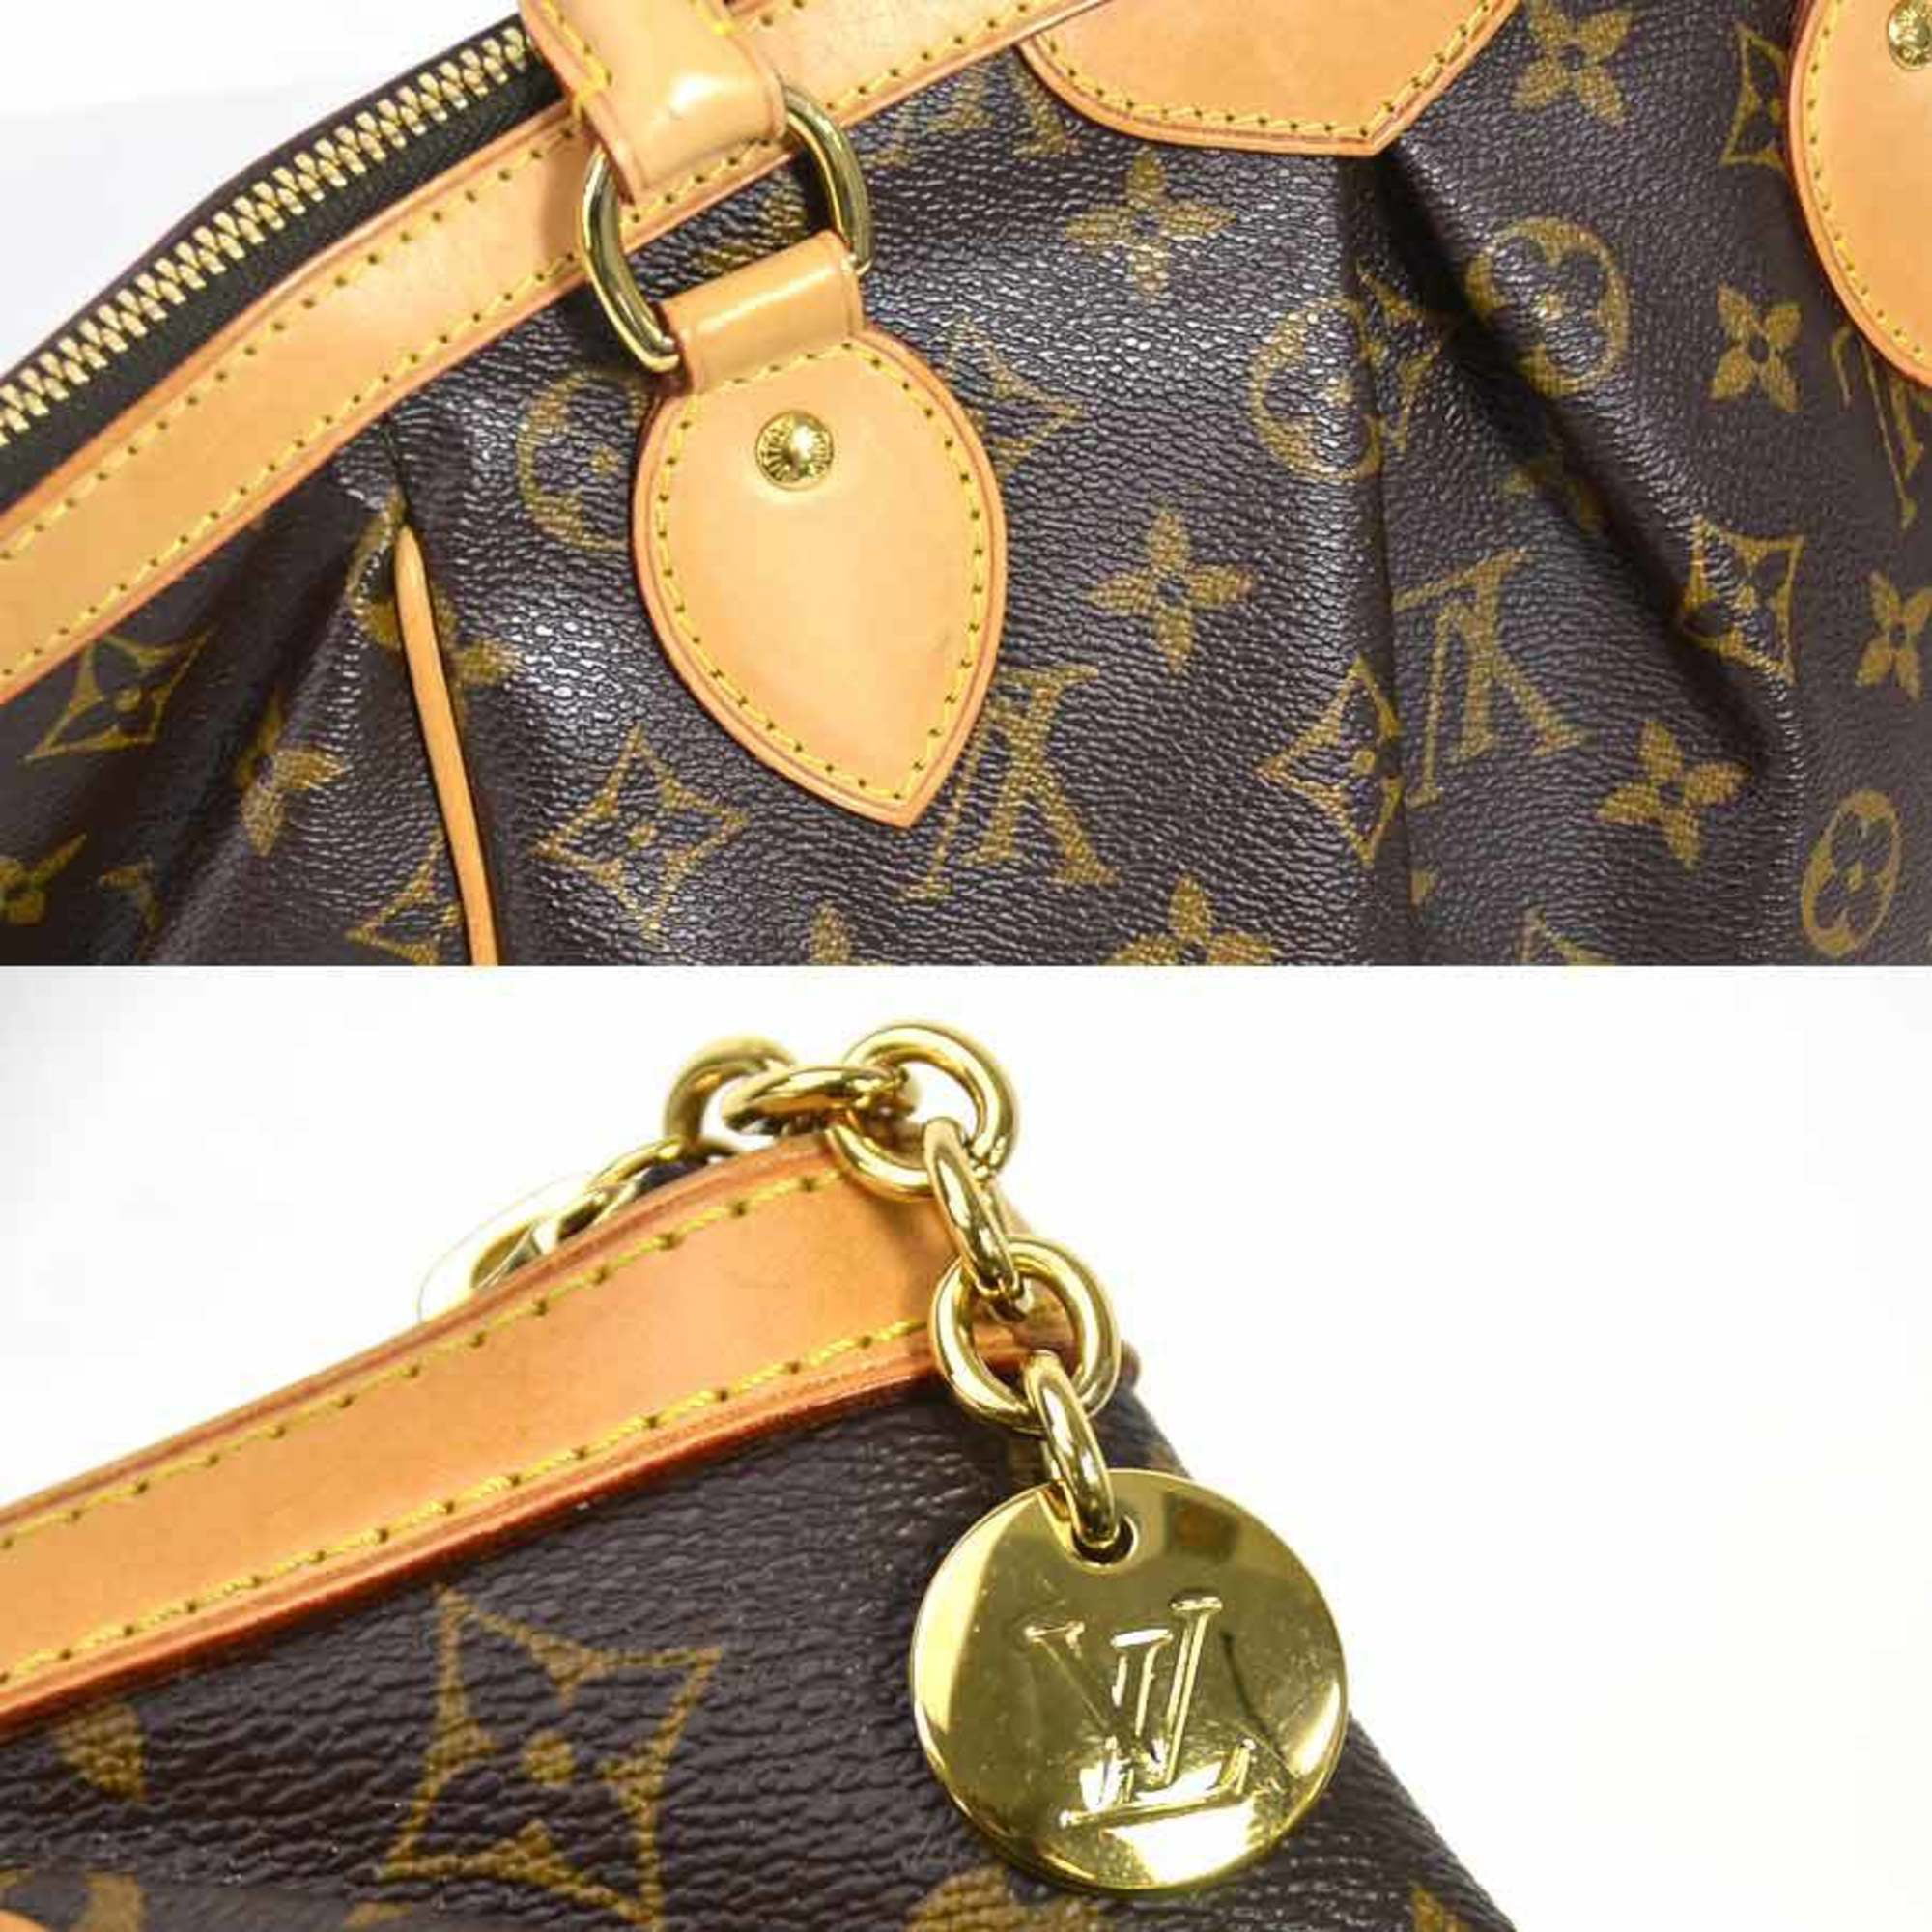 Authenticated Used Louis Vuitton Monogram Tivoli PM Handbag M40143